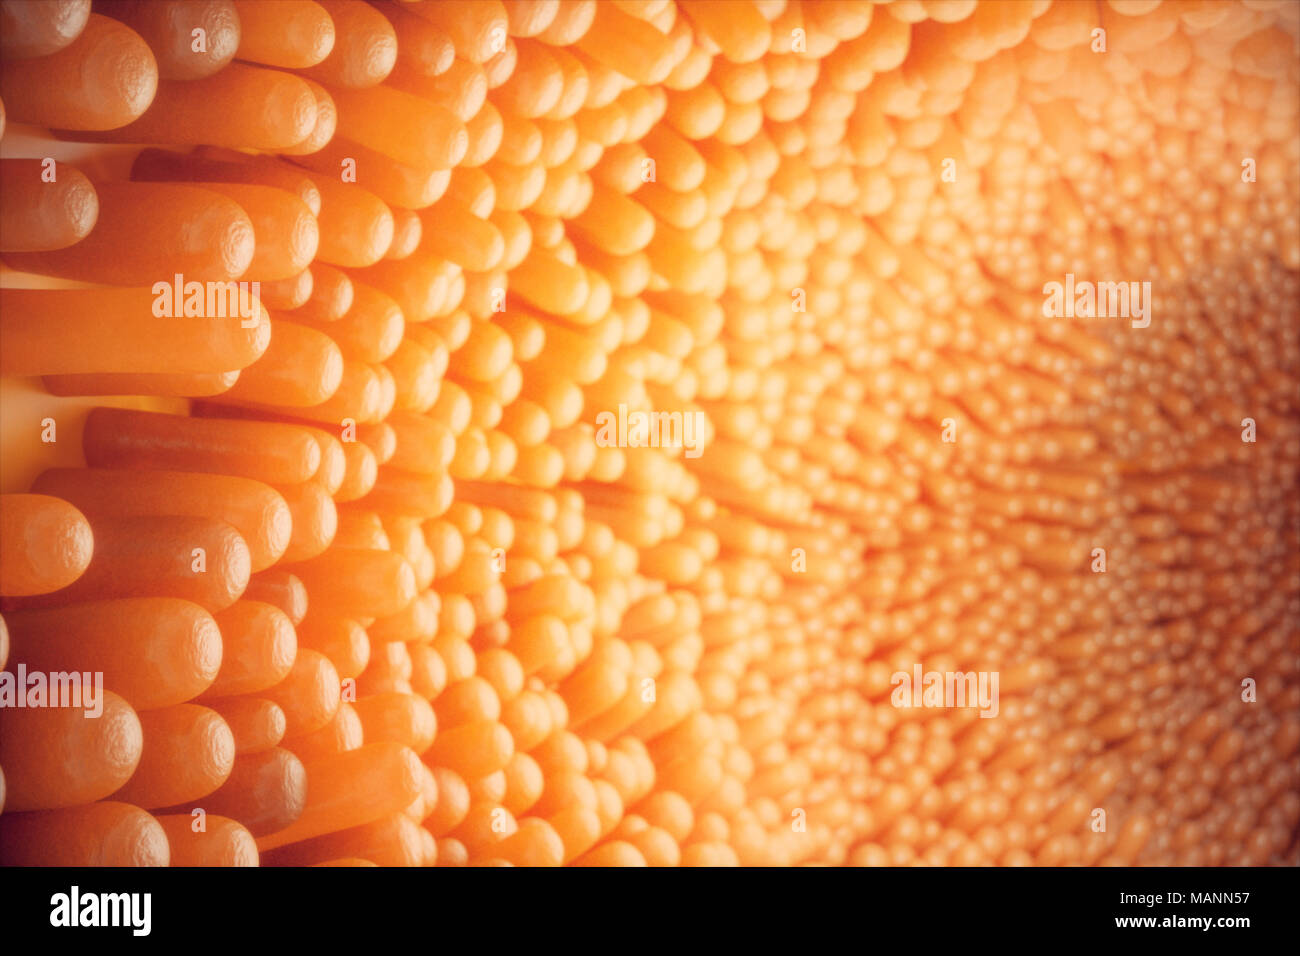 3D illustration close-up Intestinal villi. Intestine lining. Microscopic villi and capillary. Human intestine. Concept of a healthy or diseased intestine. Stock Photo